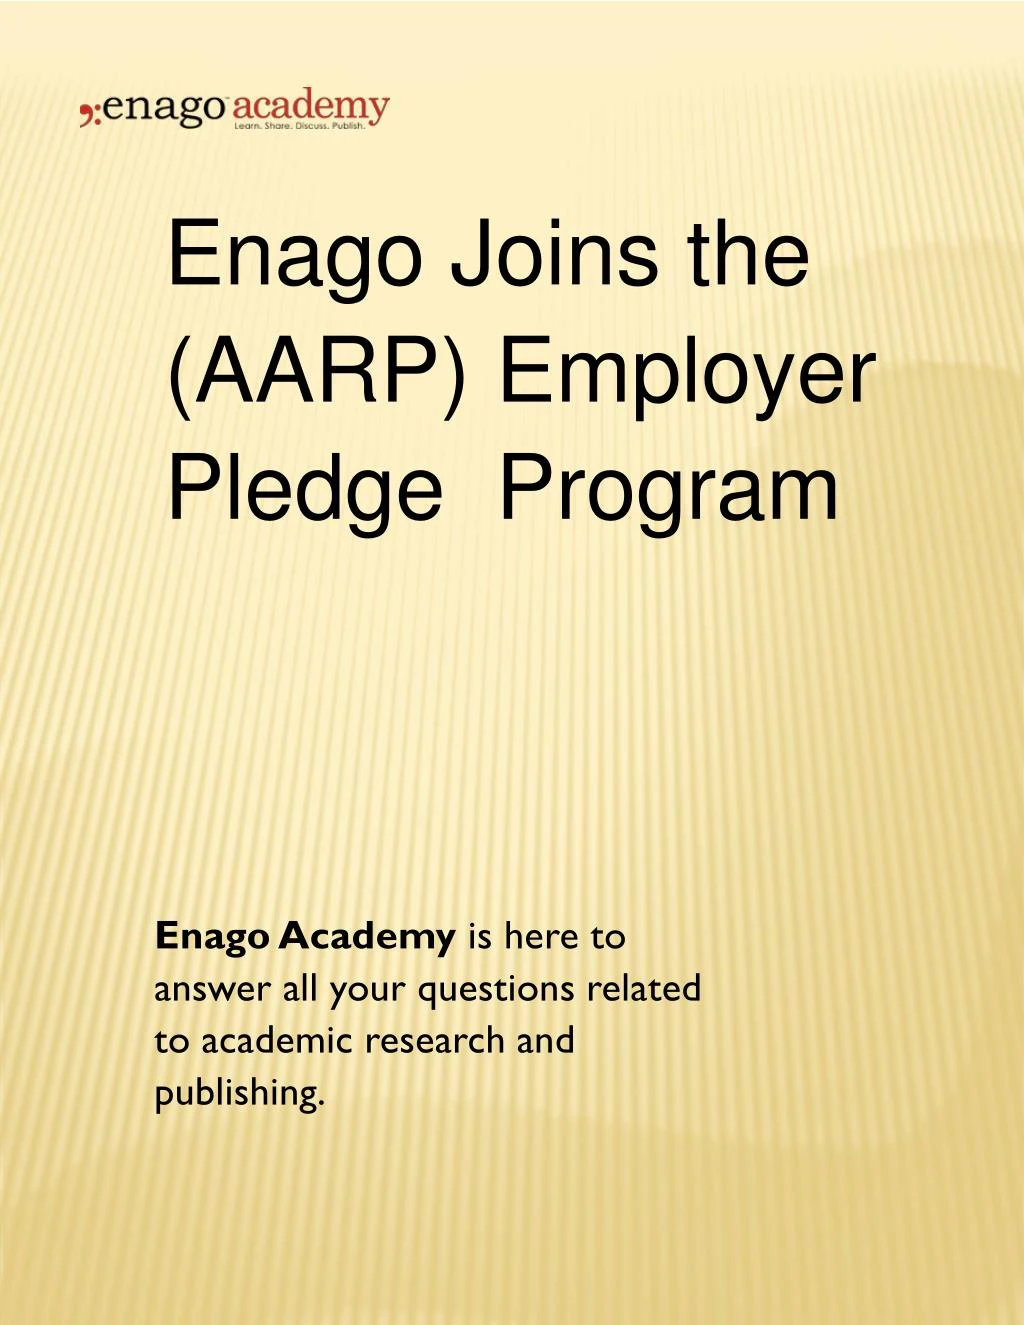 enago joins the aarp employer pledge program